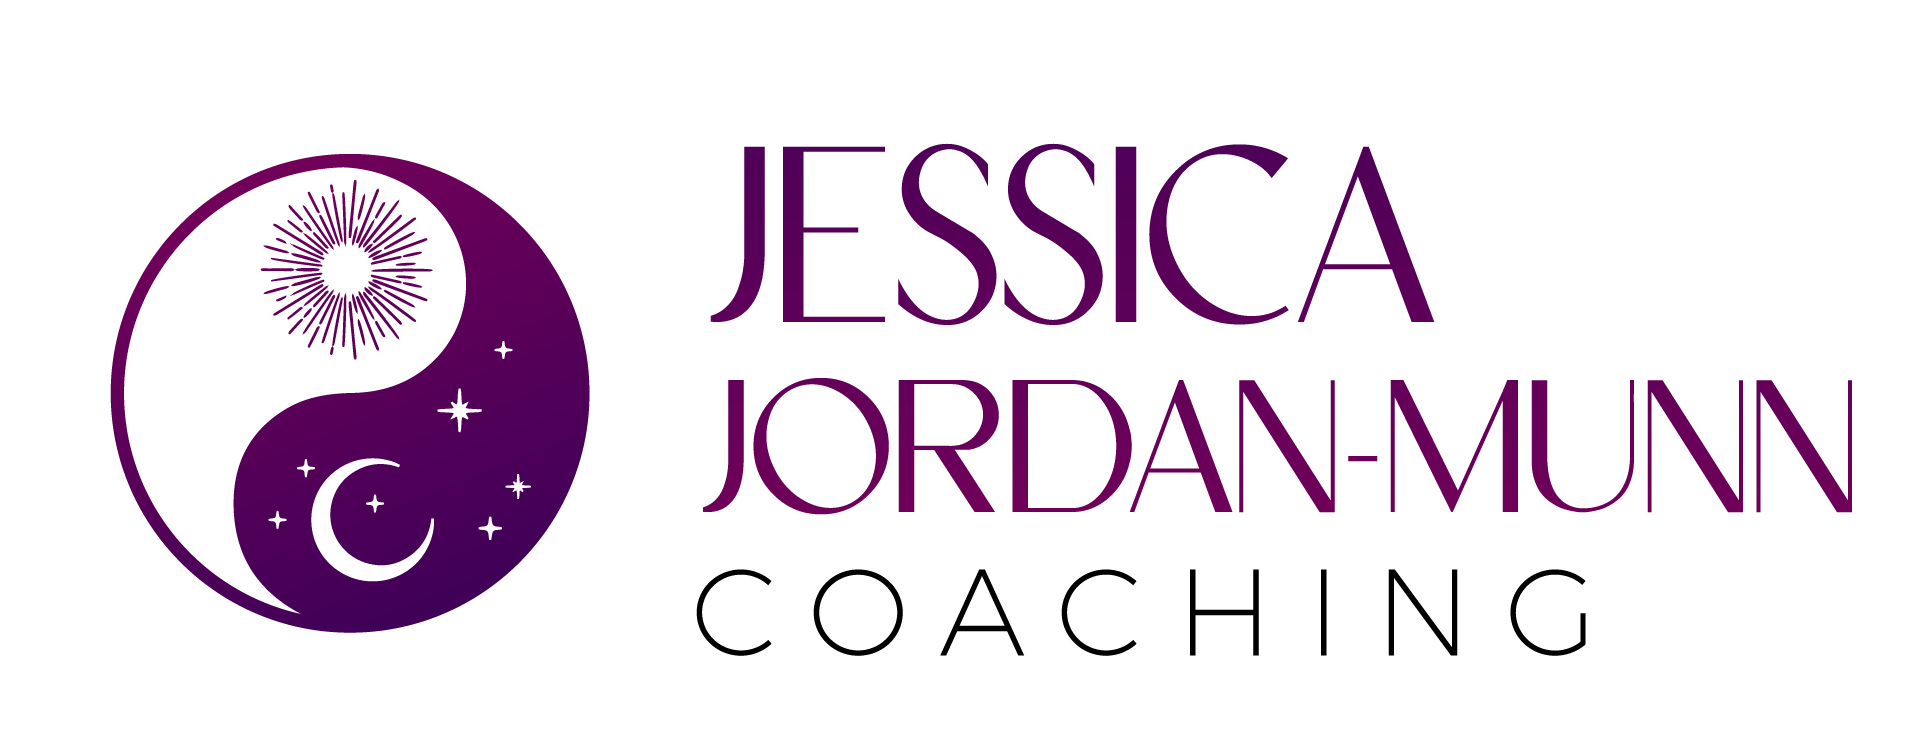 JESSICA JORDAN-MUNN